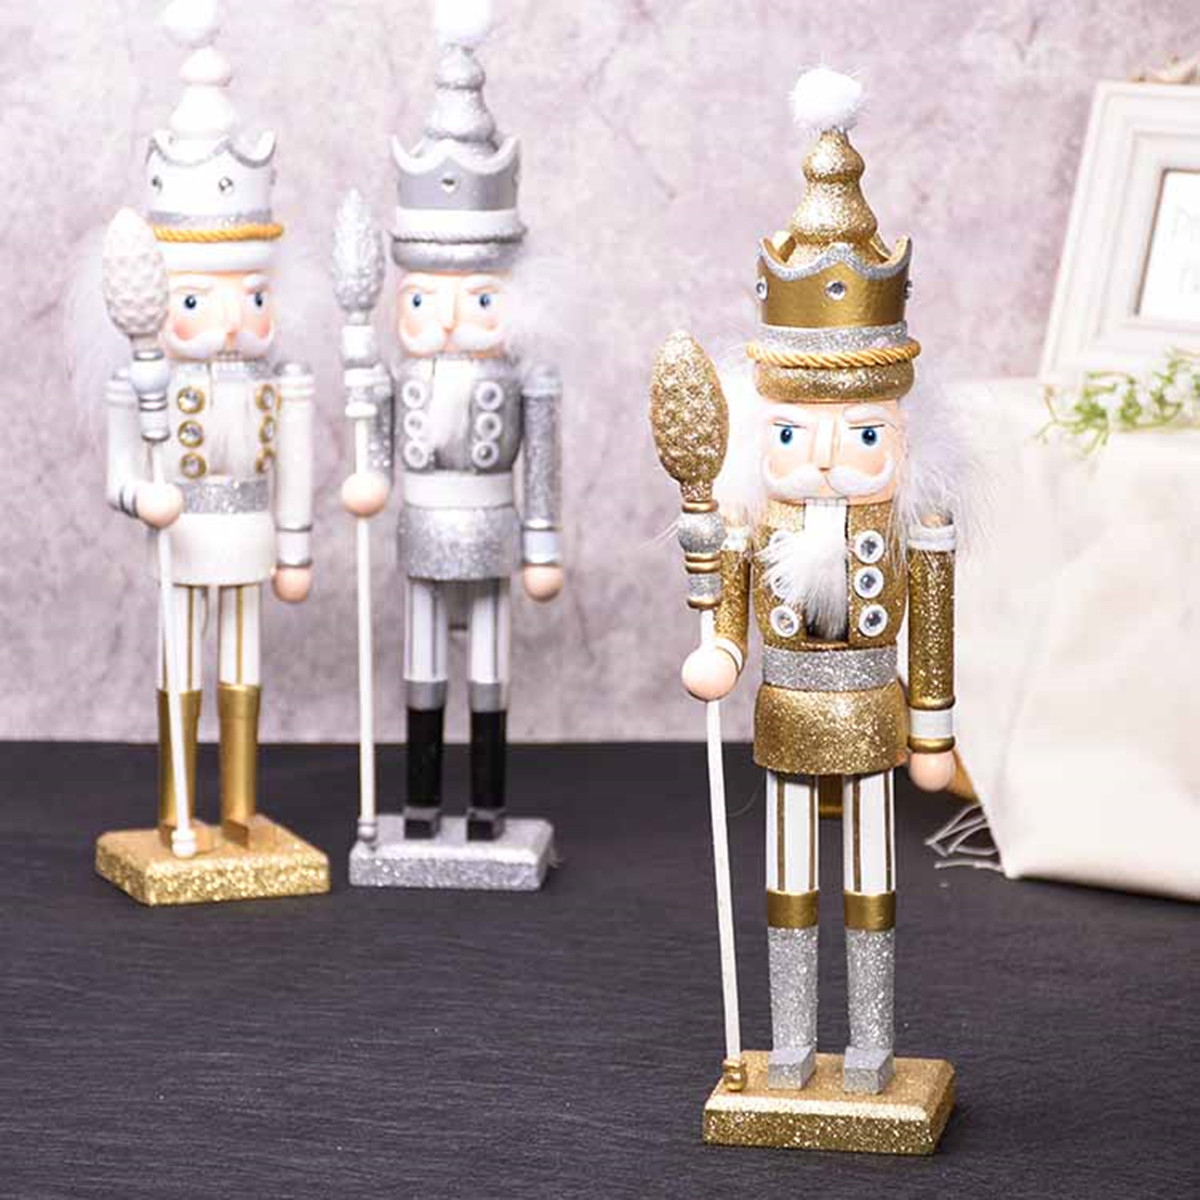 42cm-Wooden-Nutcracker-Doll-Soldier-Vintage-Handcraft-Decoration-Christmas-Action-Figure-Gifts-1386592-3